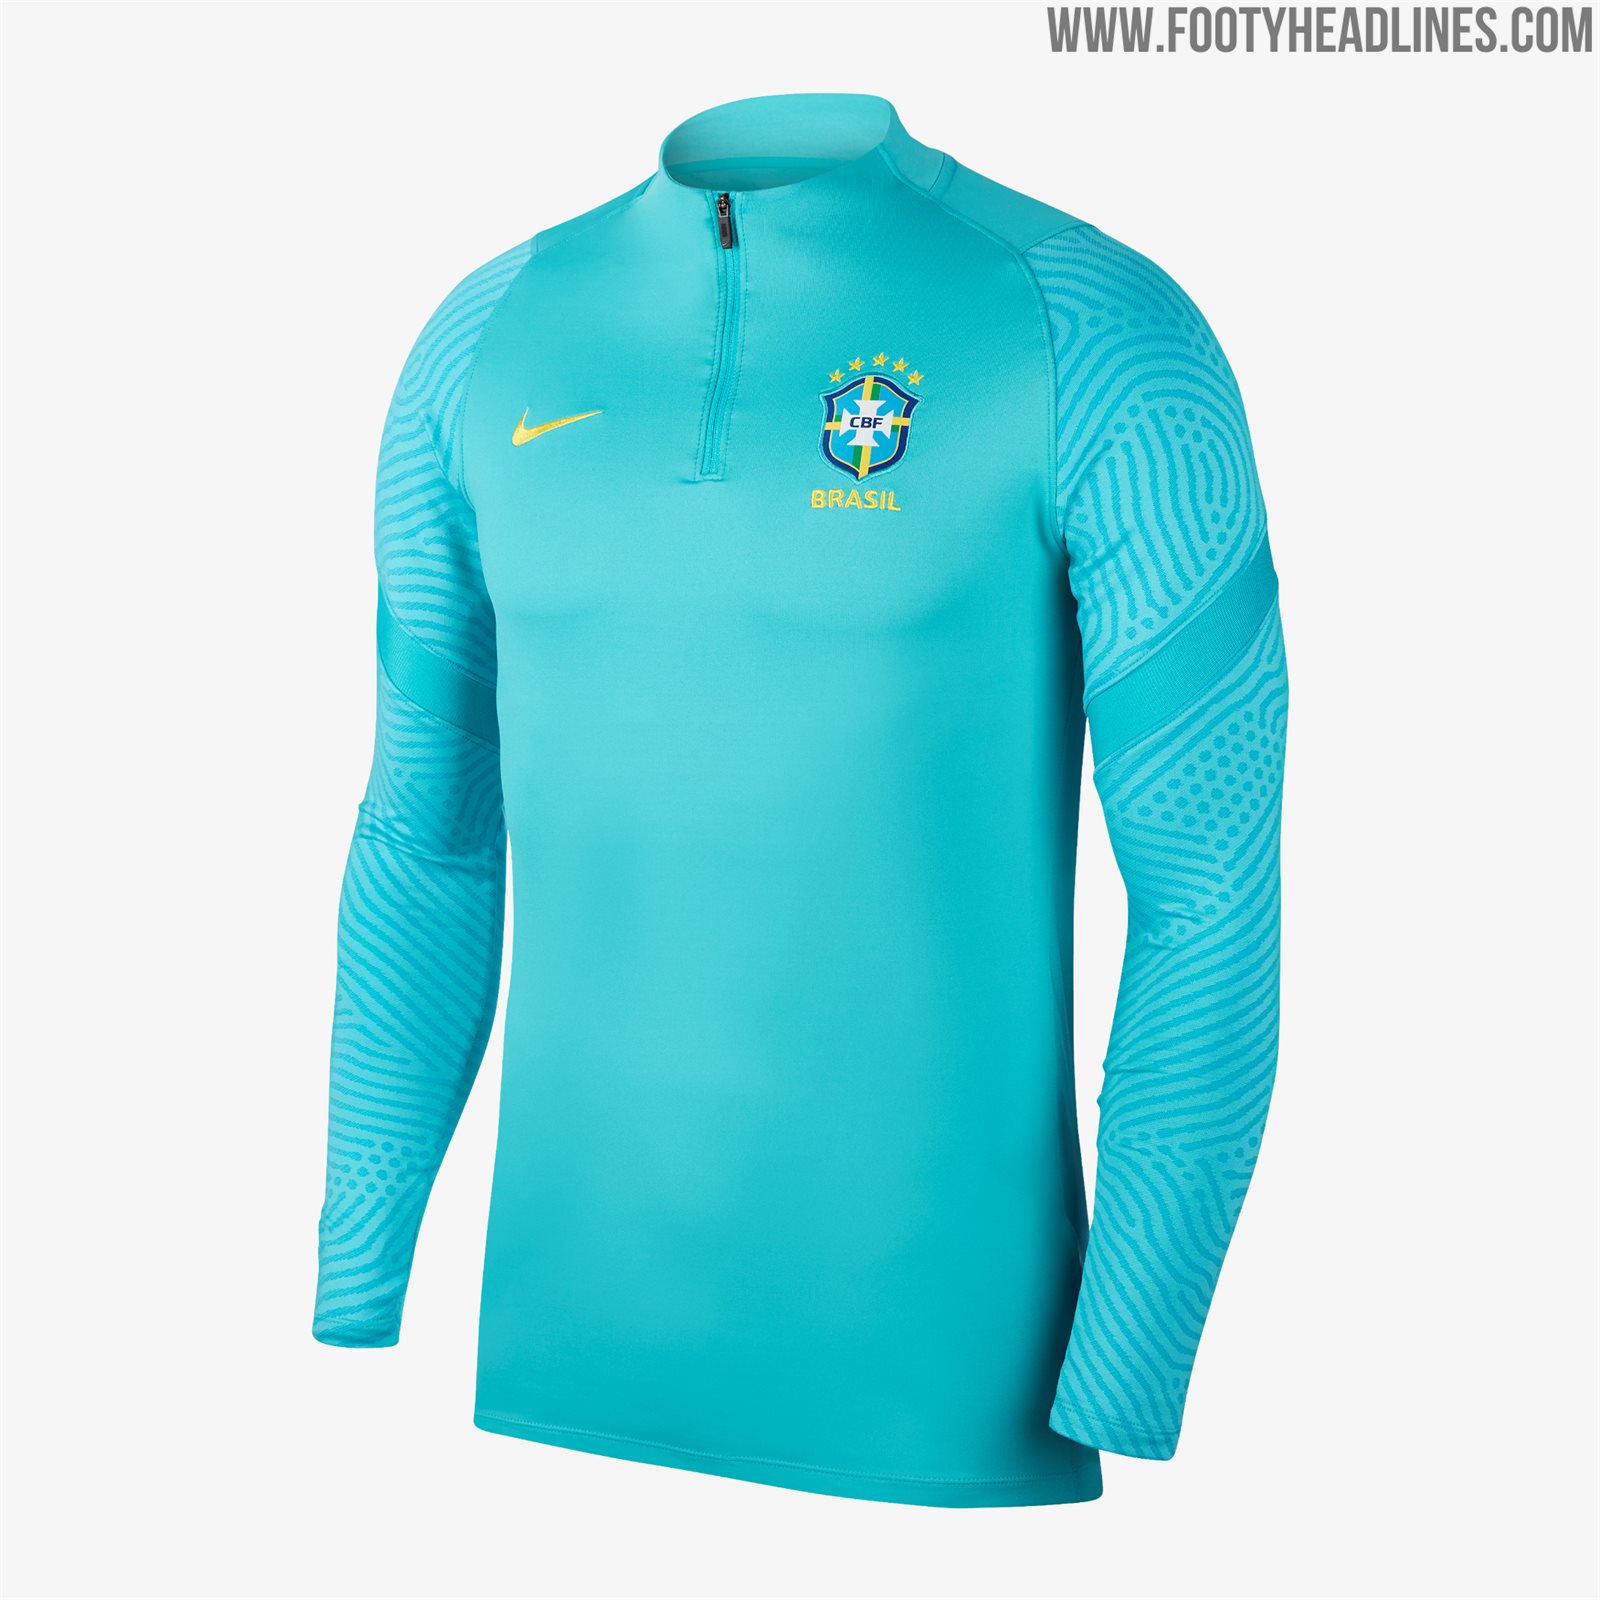 All Nike 2020-21 Training Kits: Brazil, England, France, Portugal & More -  Footy Headlines